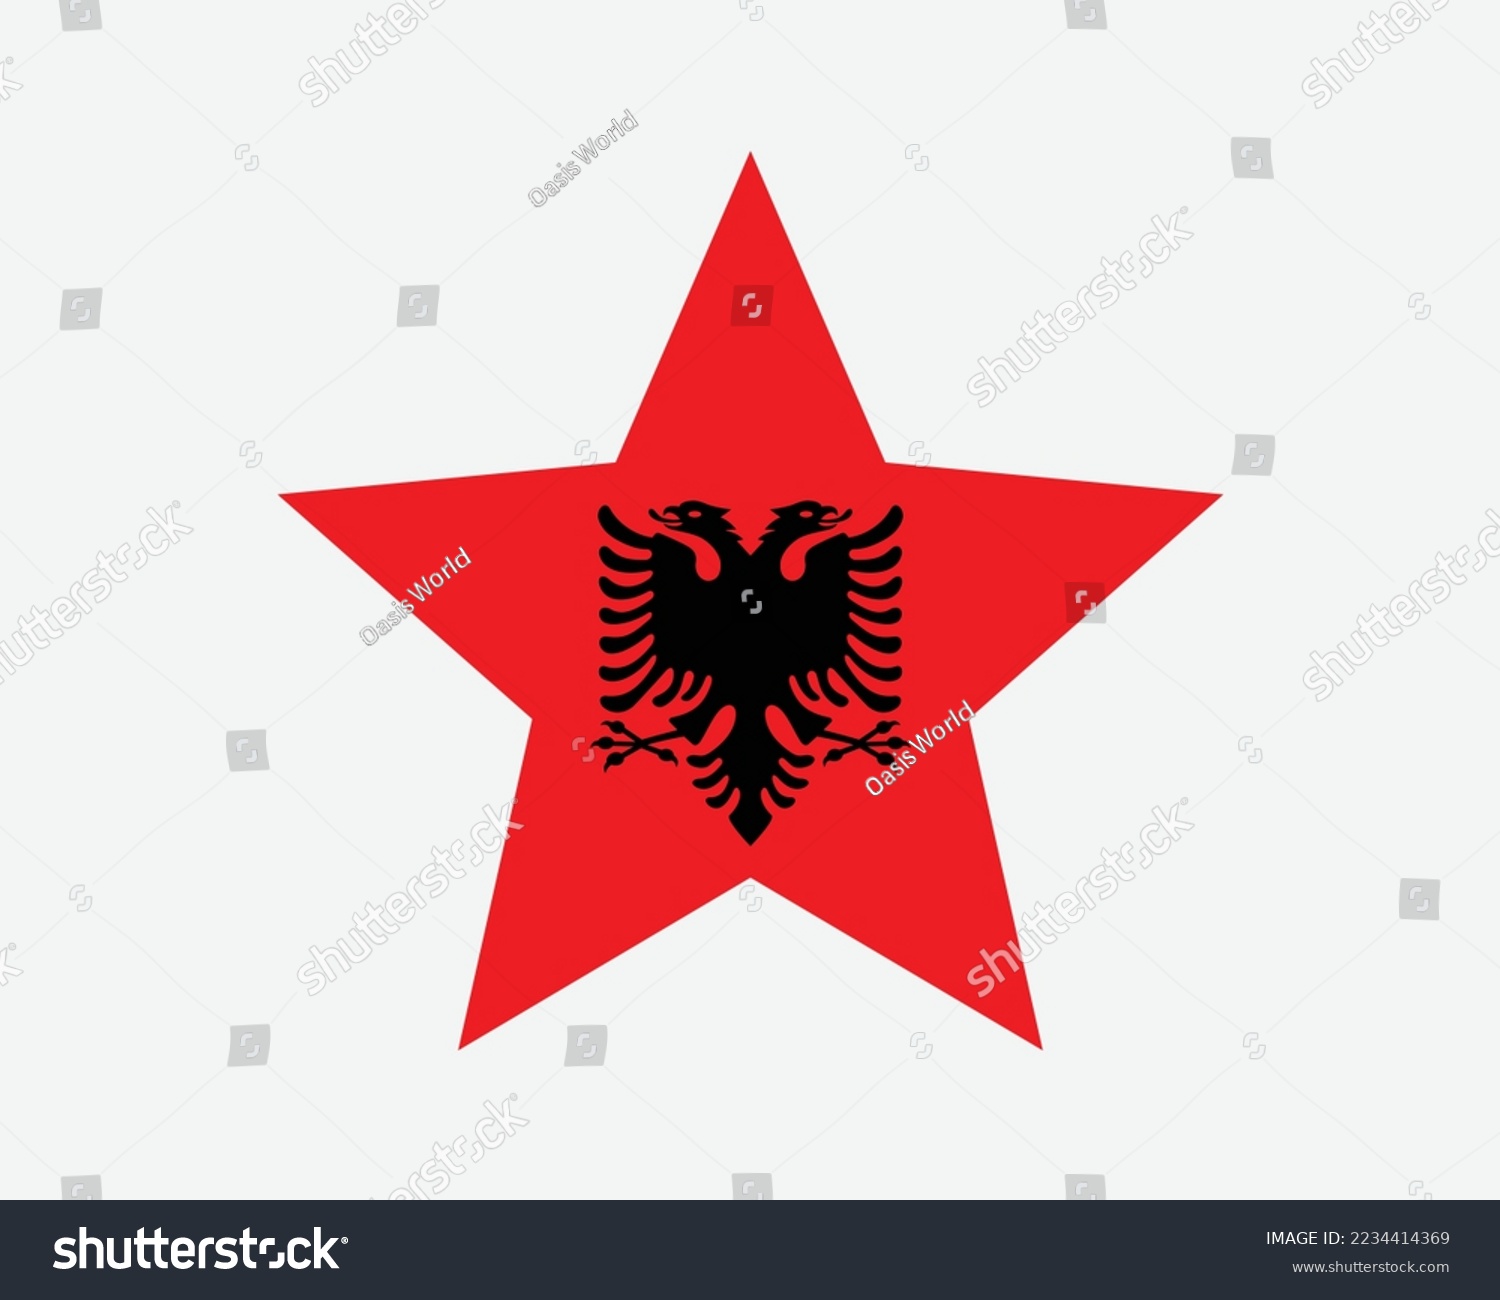 SVG of Albania Star Flag. Albanian Star Shape Flag. Country National Banner Icon Symbol Vector 2D Flat Artwork Graphic Illustration svg